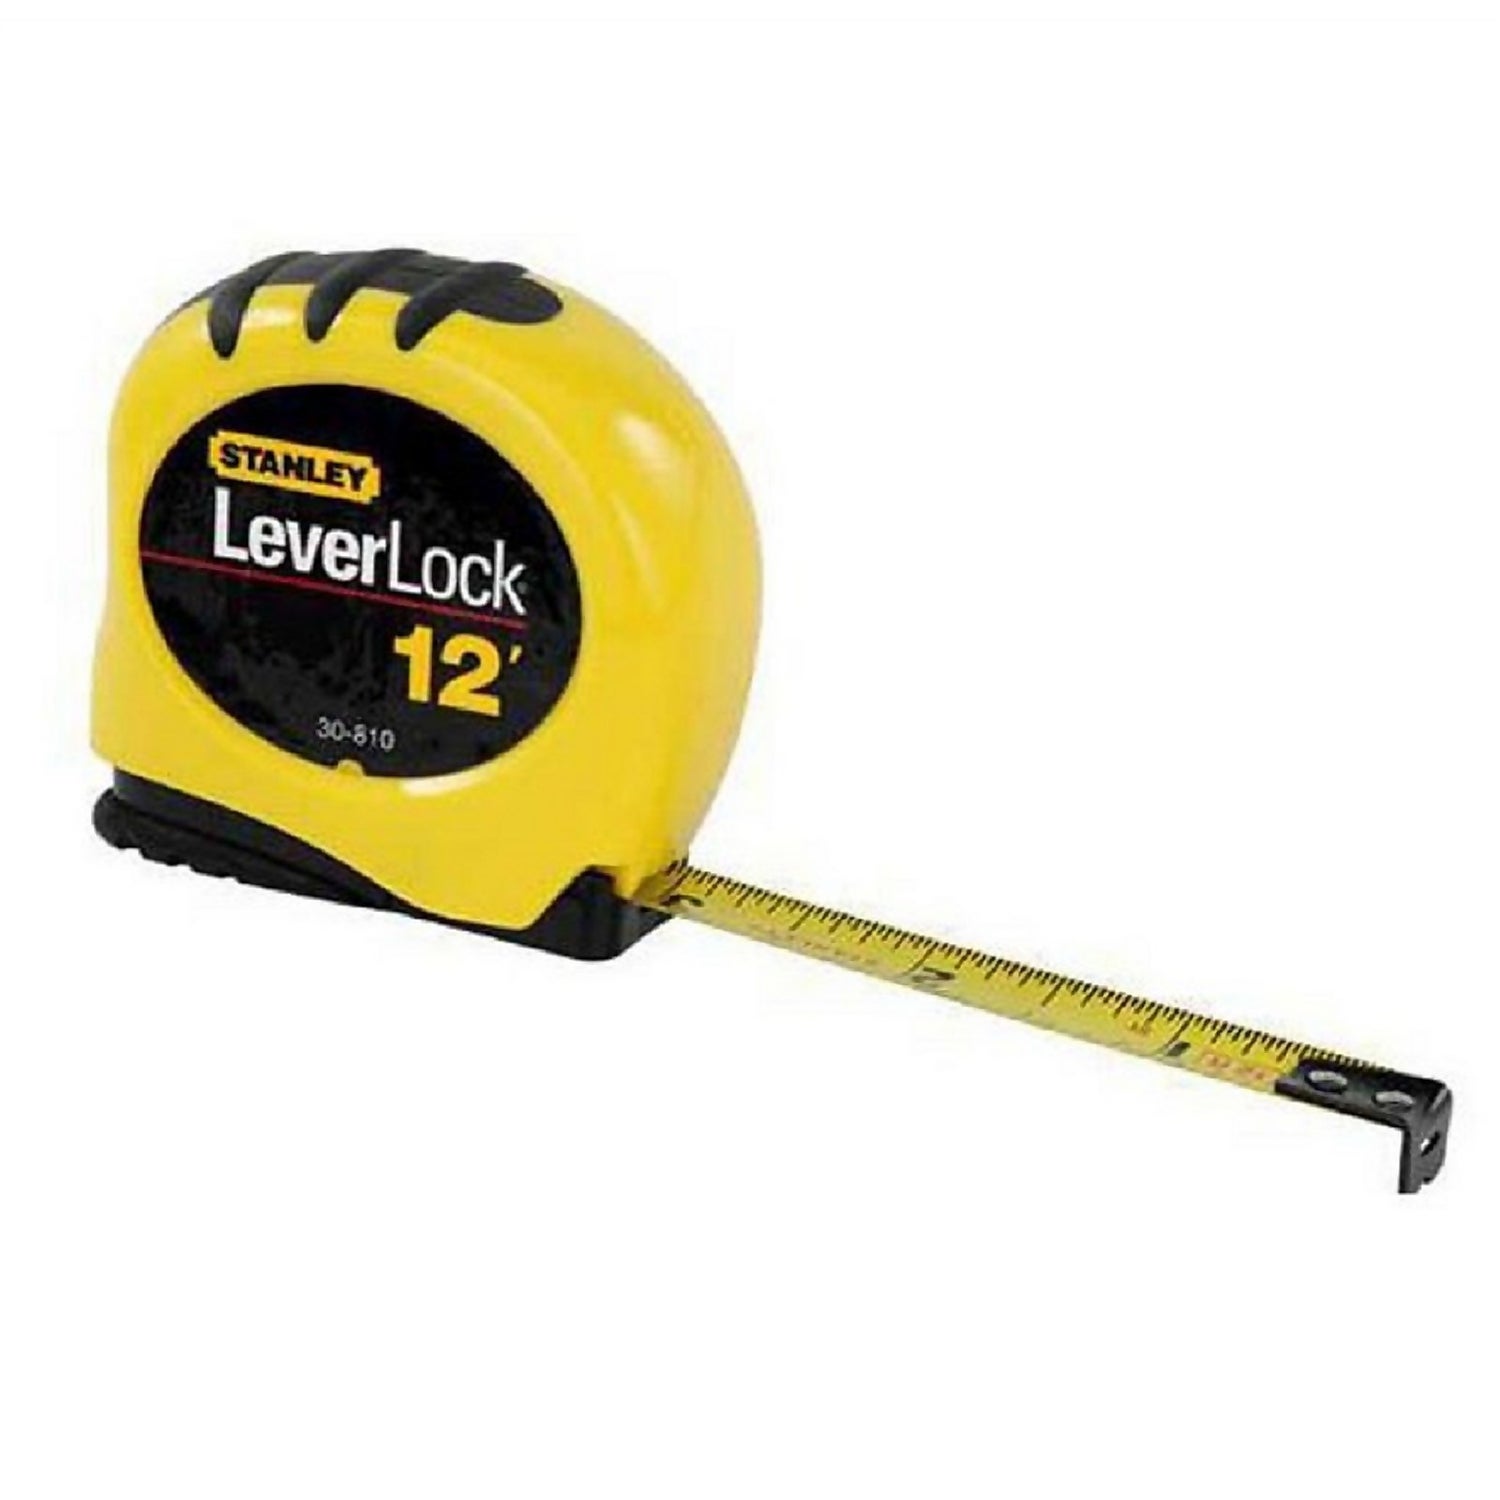 Stanley Leverlock Tape Measure - 3m